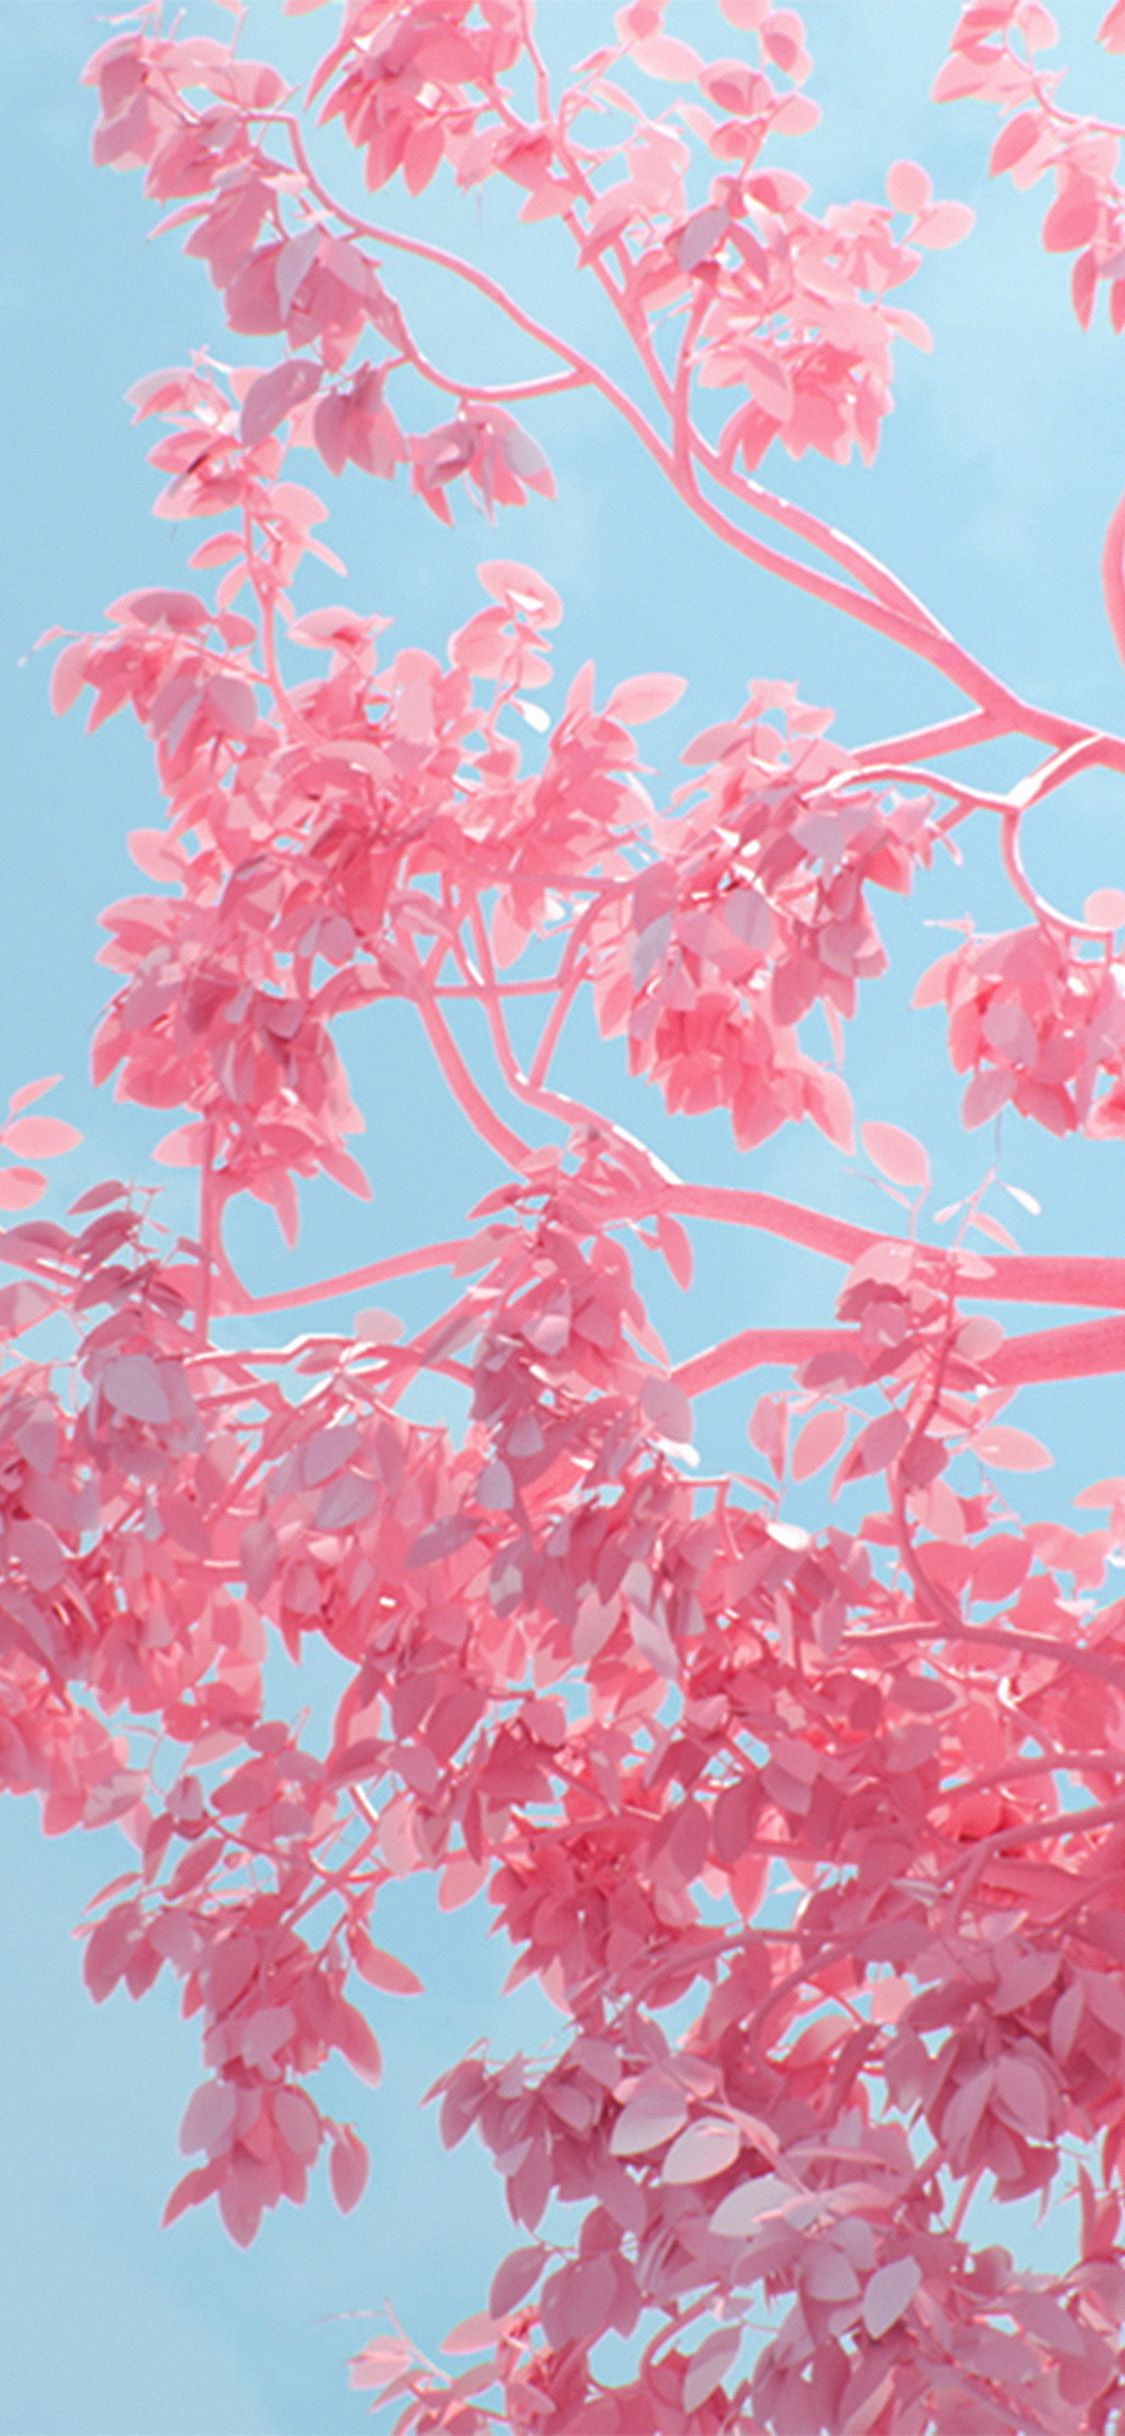 iPhone X wallpaper. tree pink spring digital art illustration